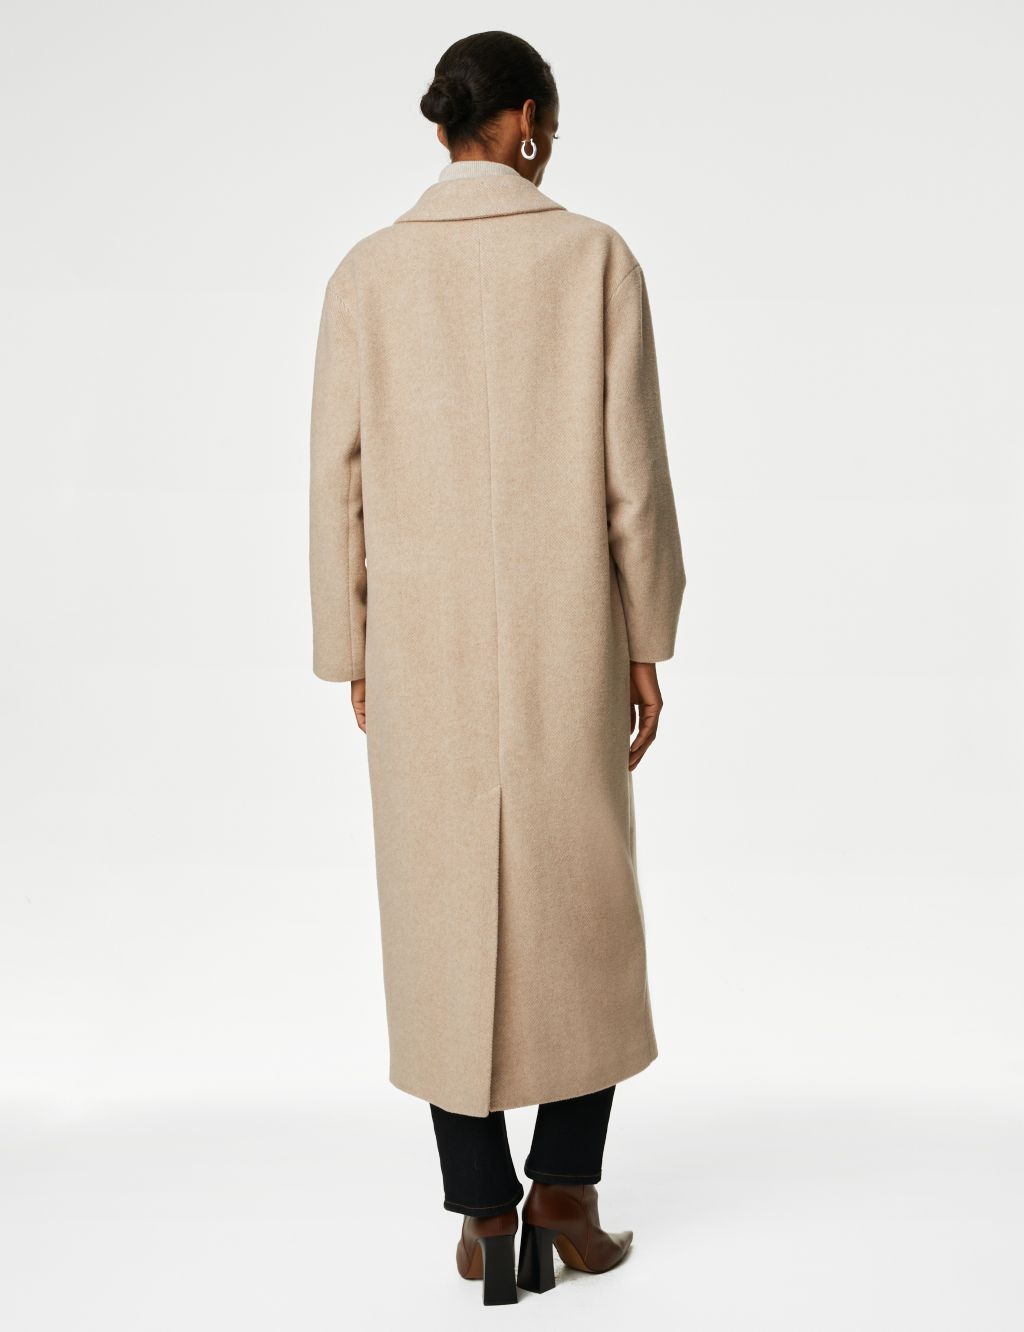 Wool Blend Herringbone Tailored Coat image 5